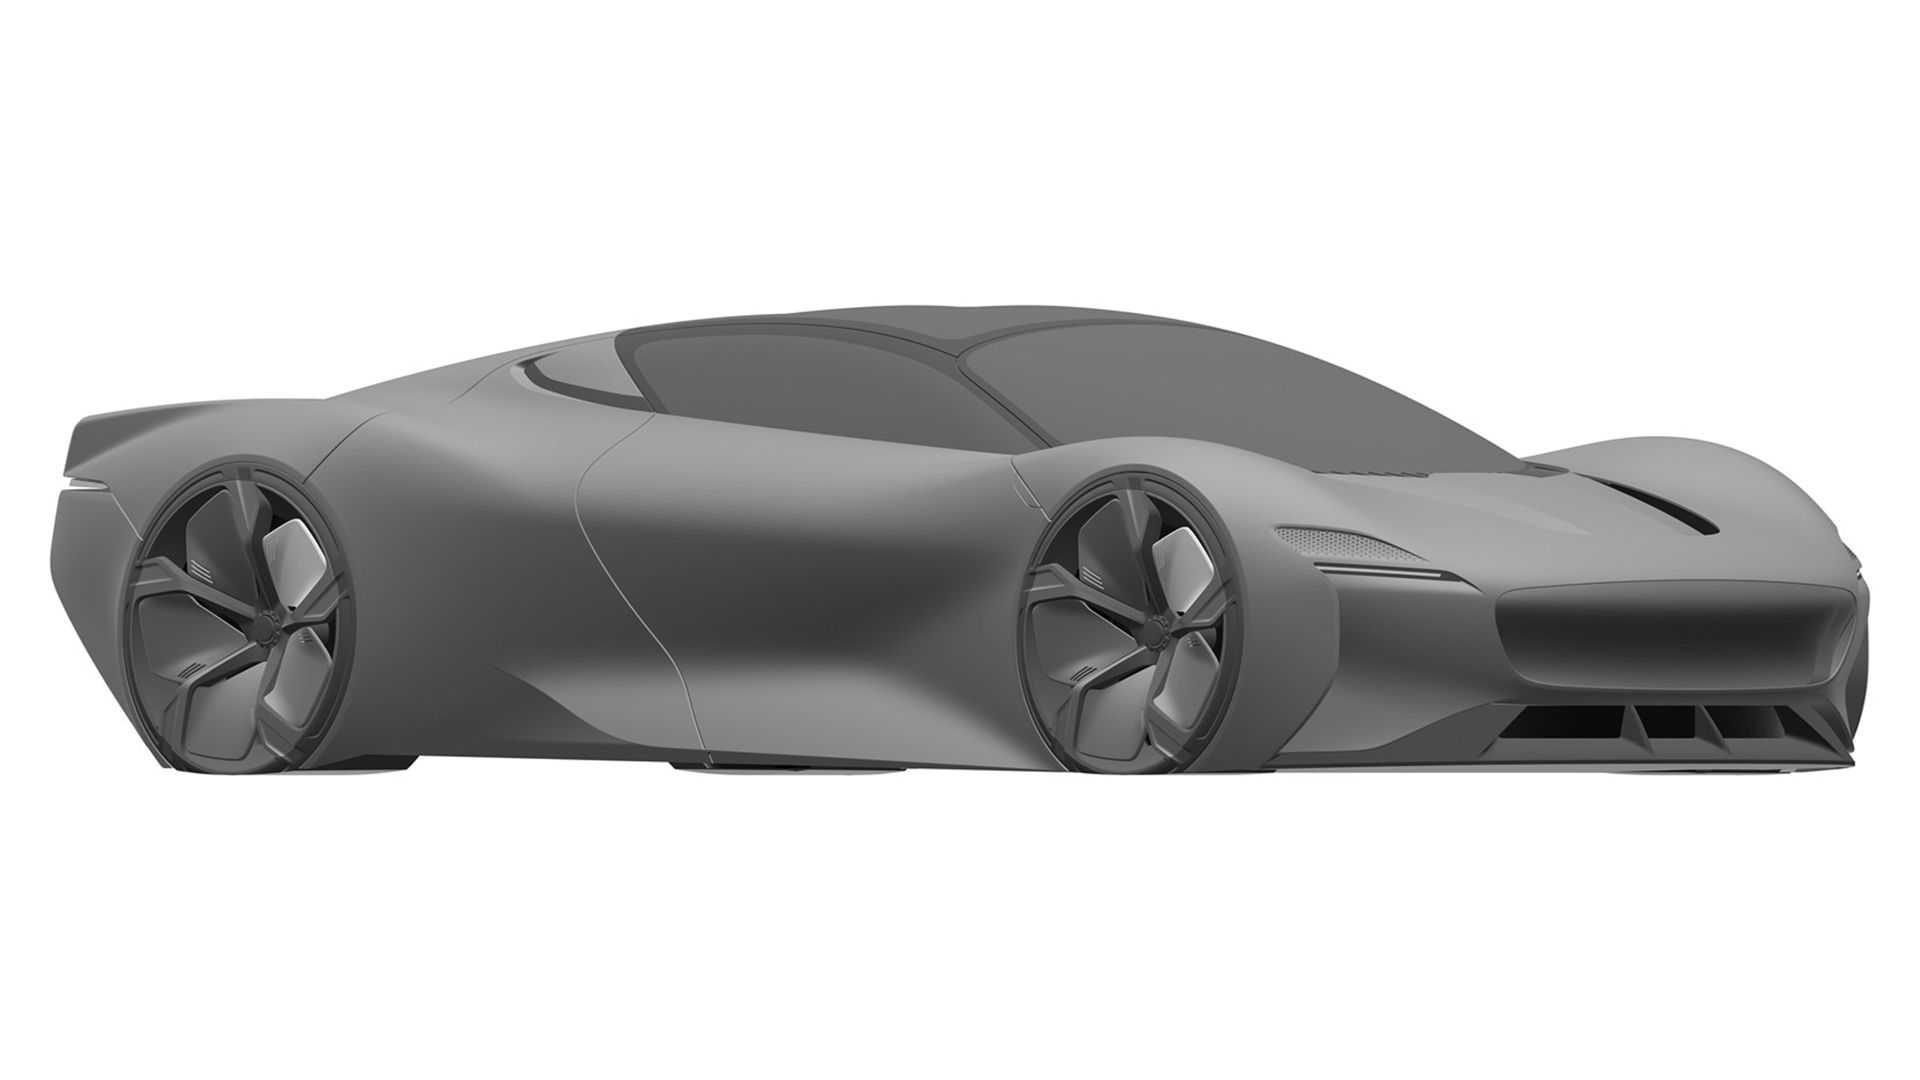 Patente mostra novo supercarro da Jaguar